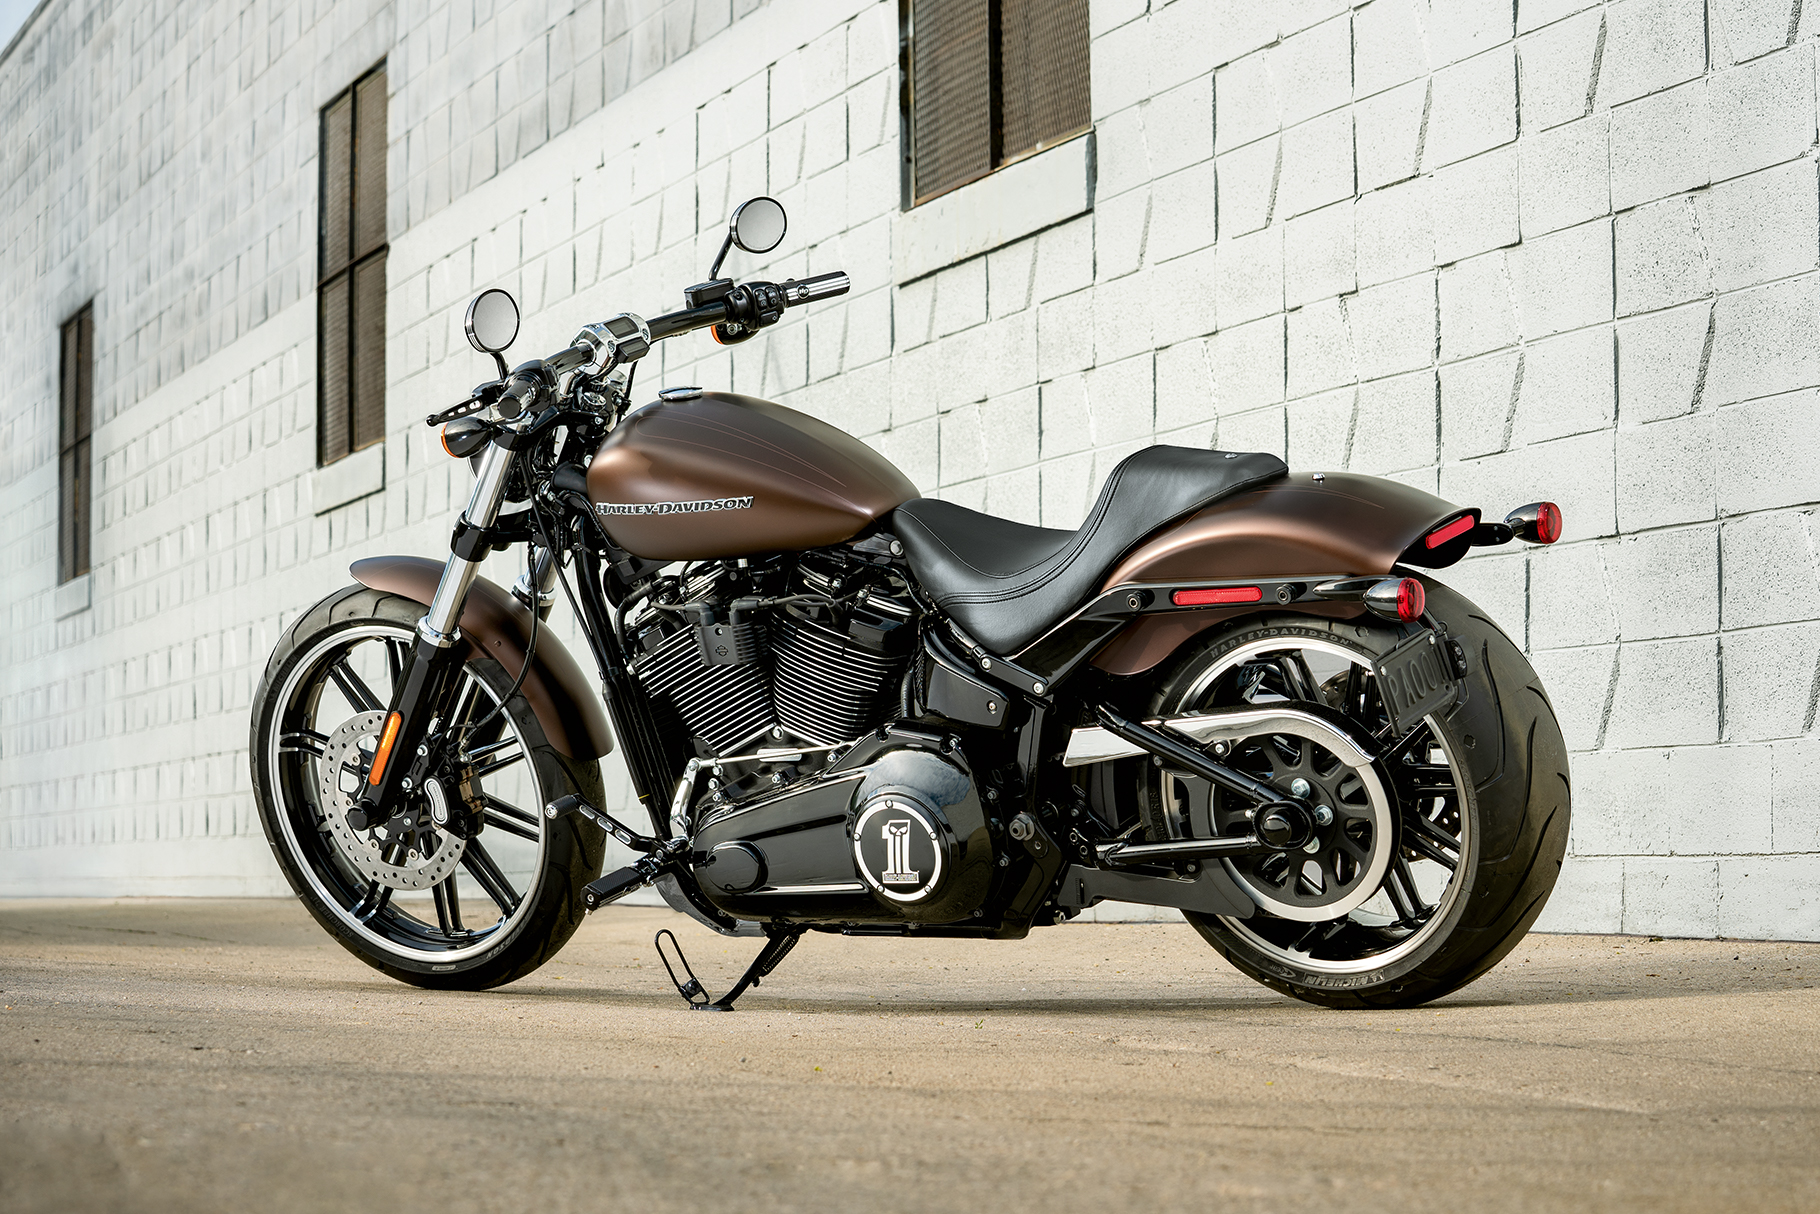  2019 Breakout Motorcycle Harley Davidson USA